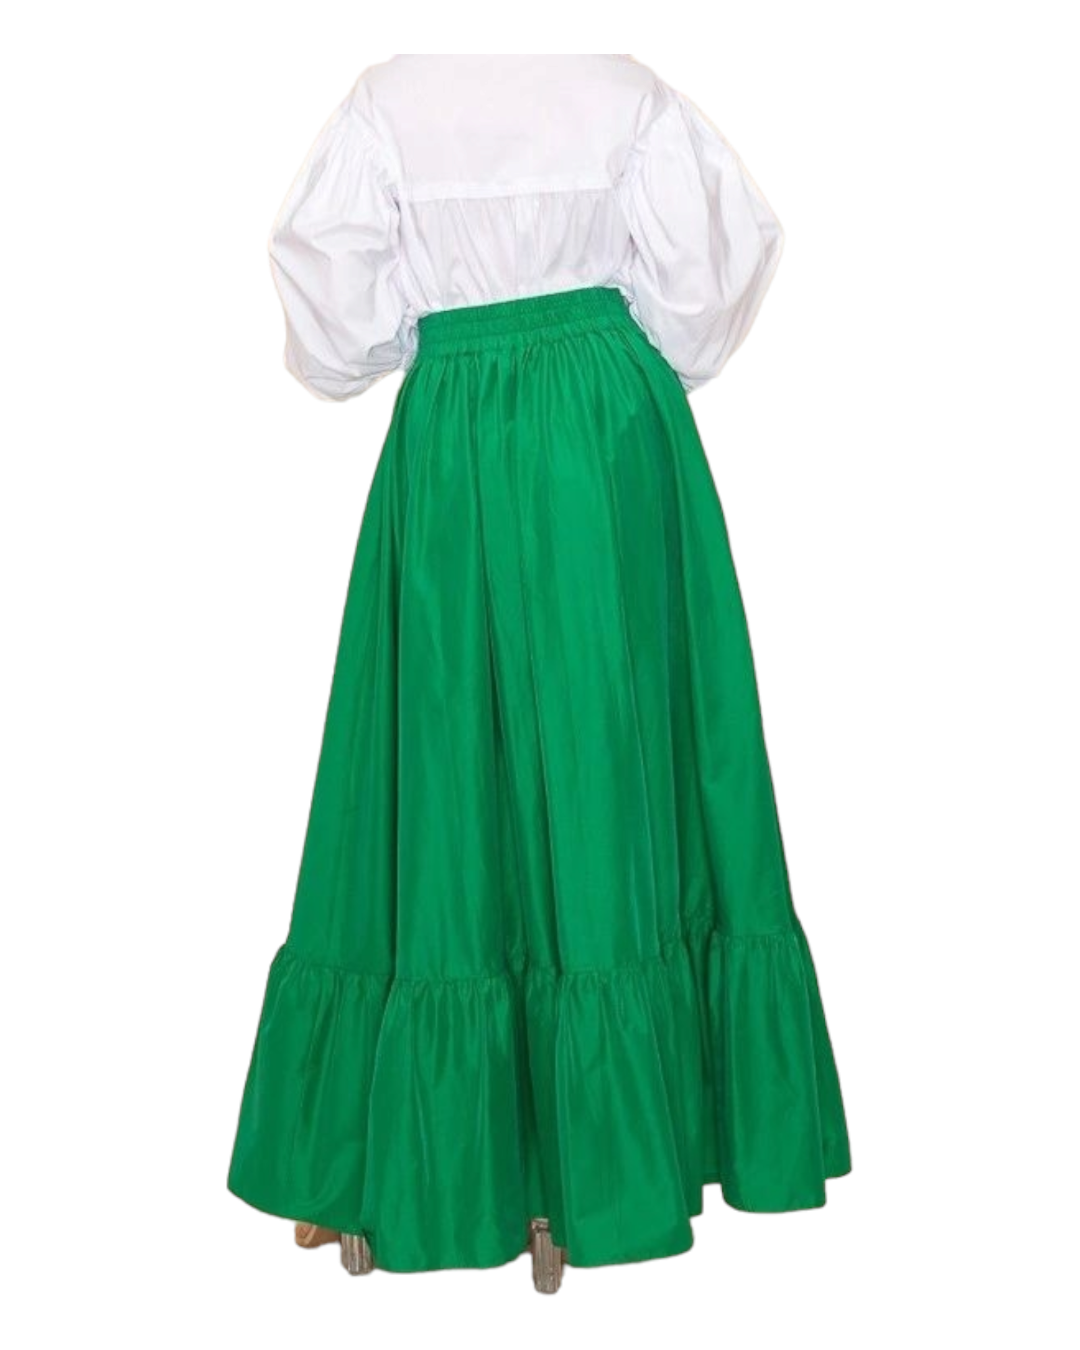 Mean Green Maxi Skirt